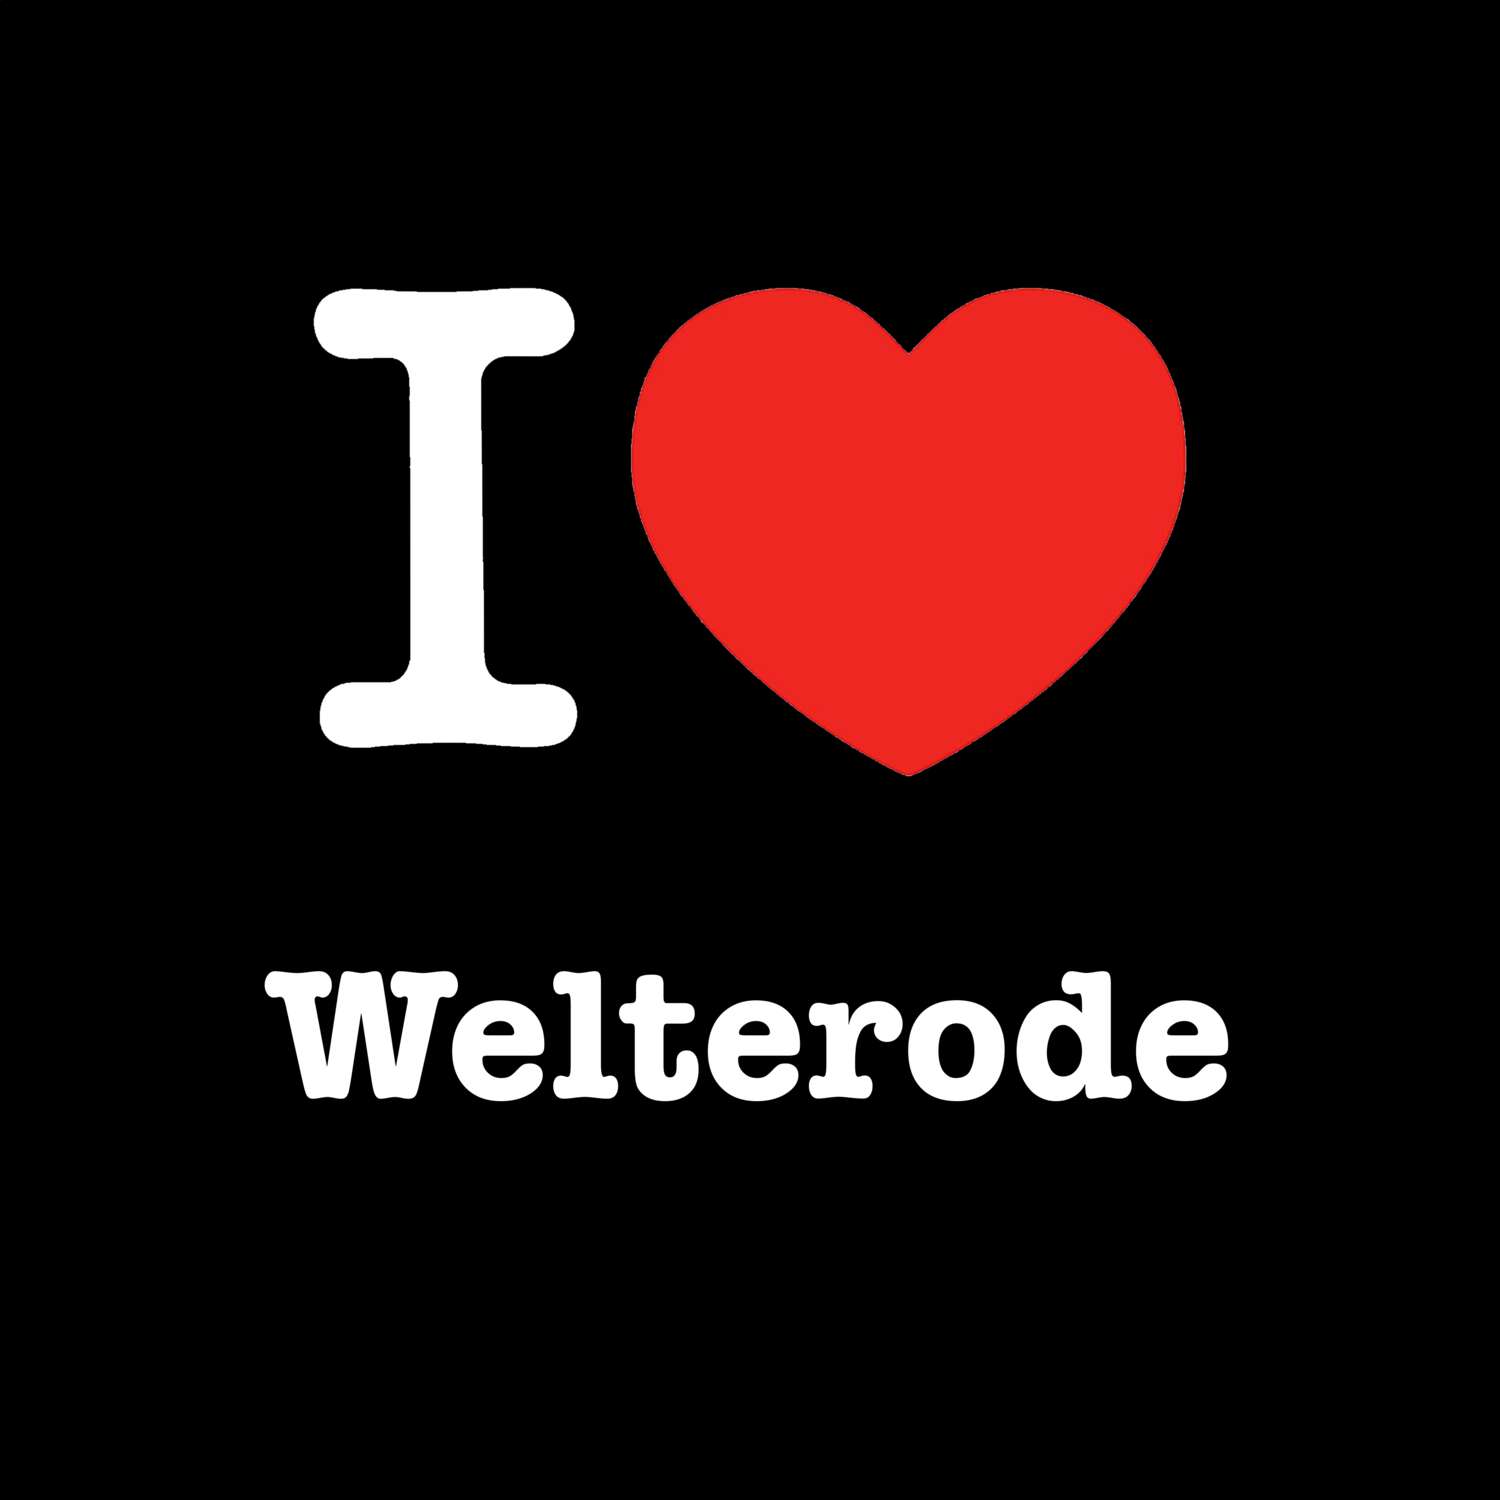 Welterode T-Shirt »I love«